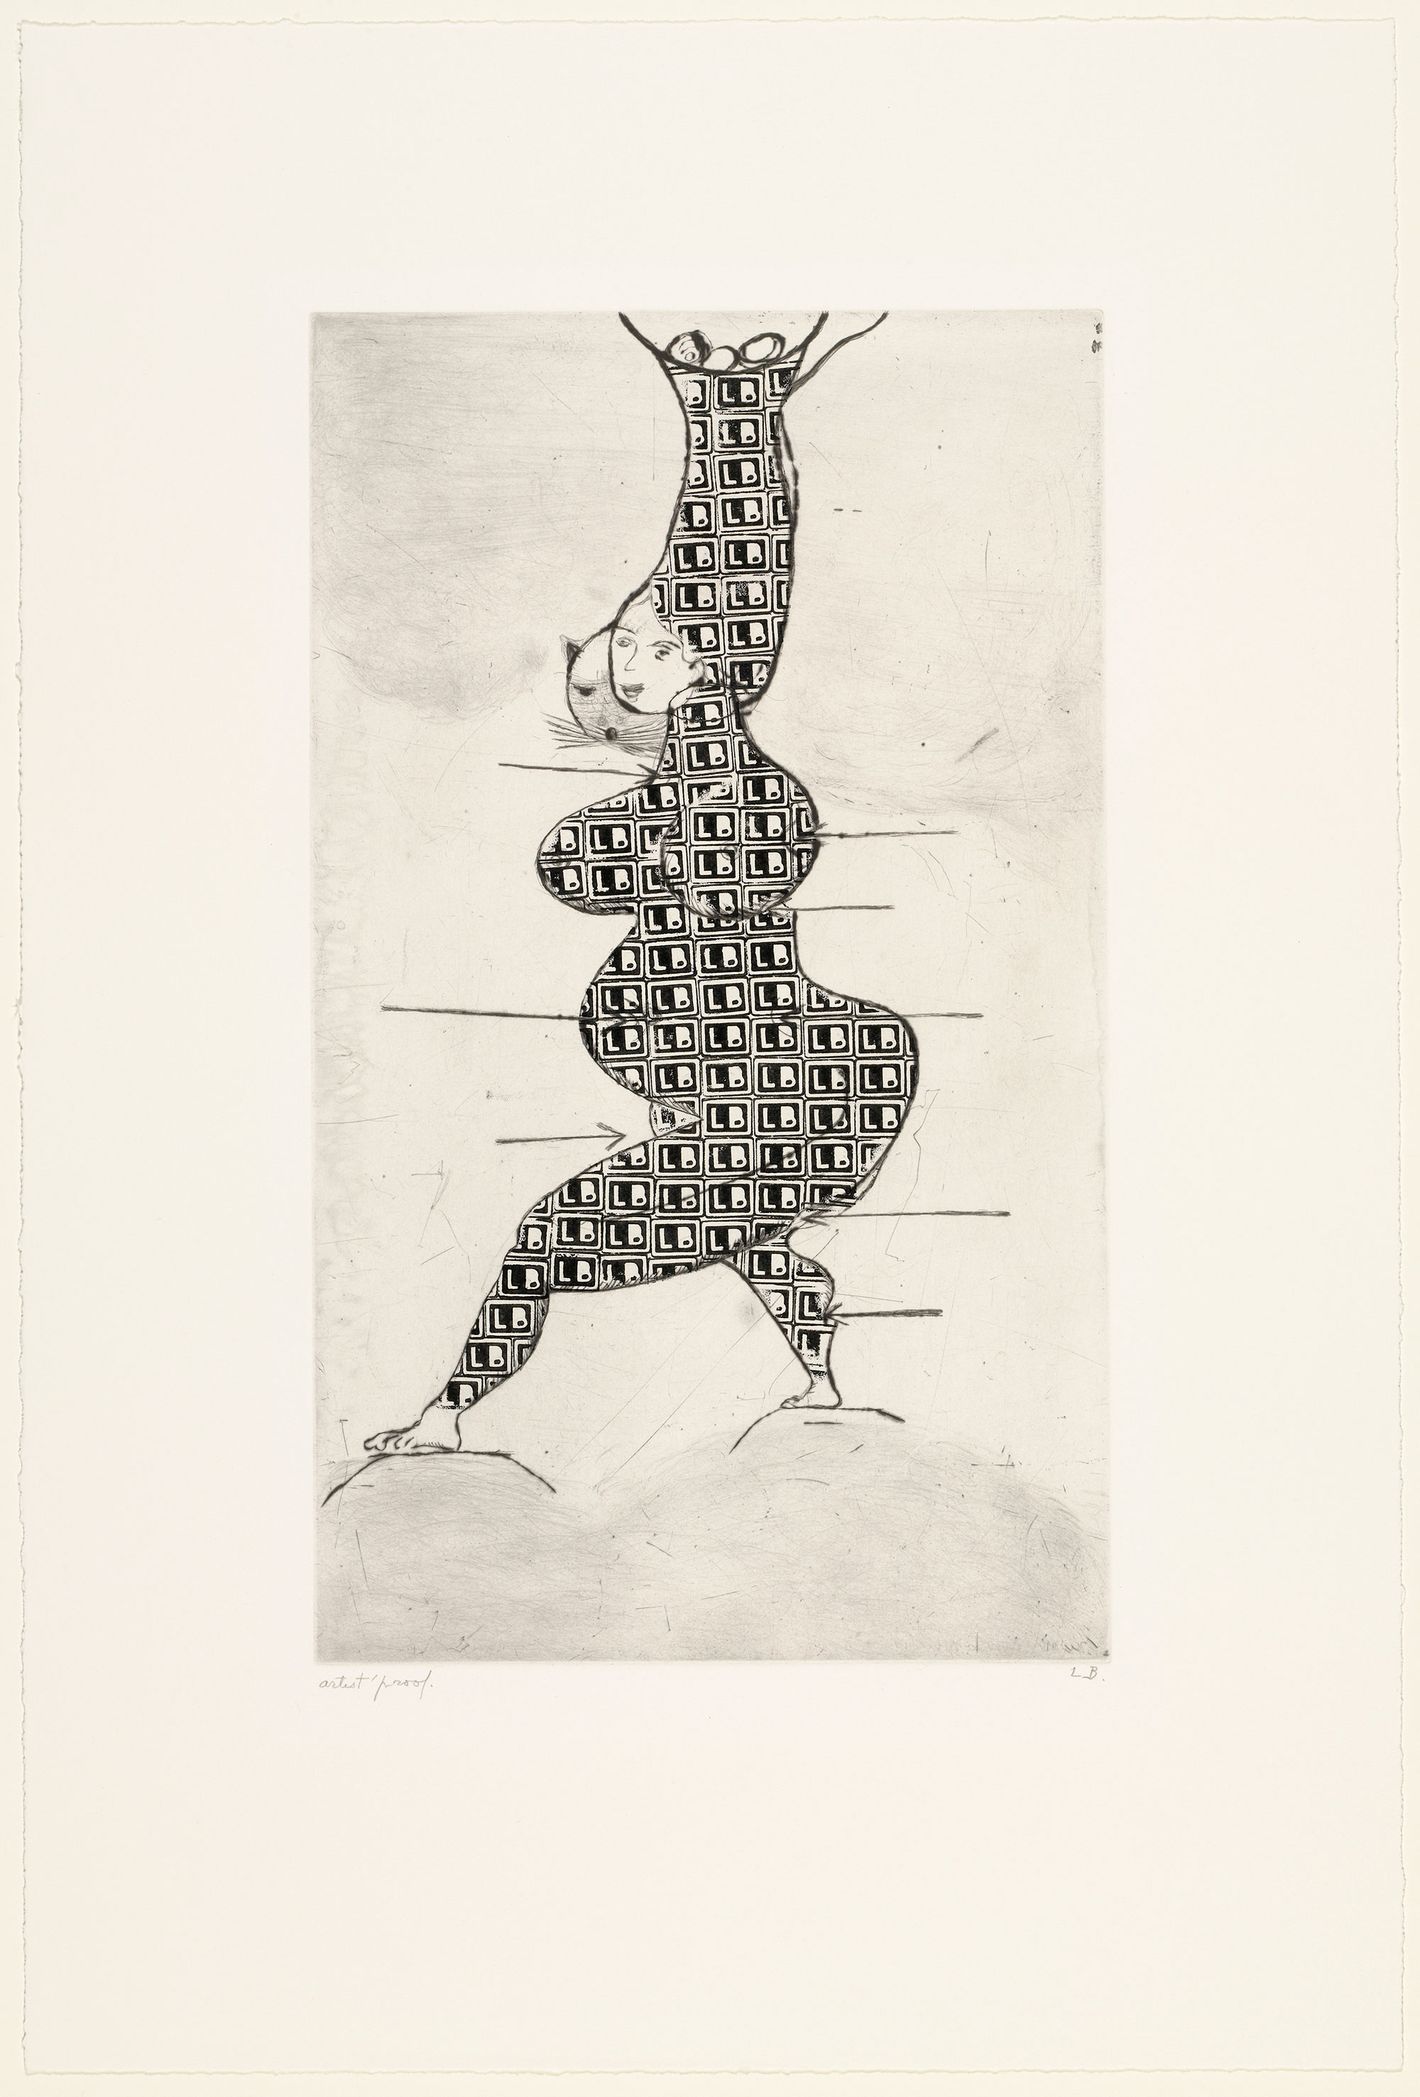 Louise Bourgeois at MoMA — less than half